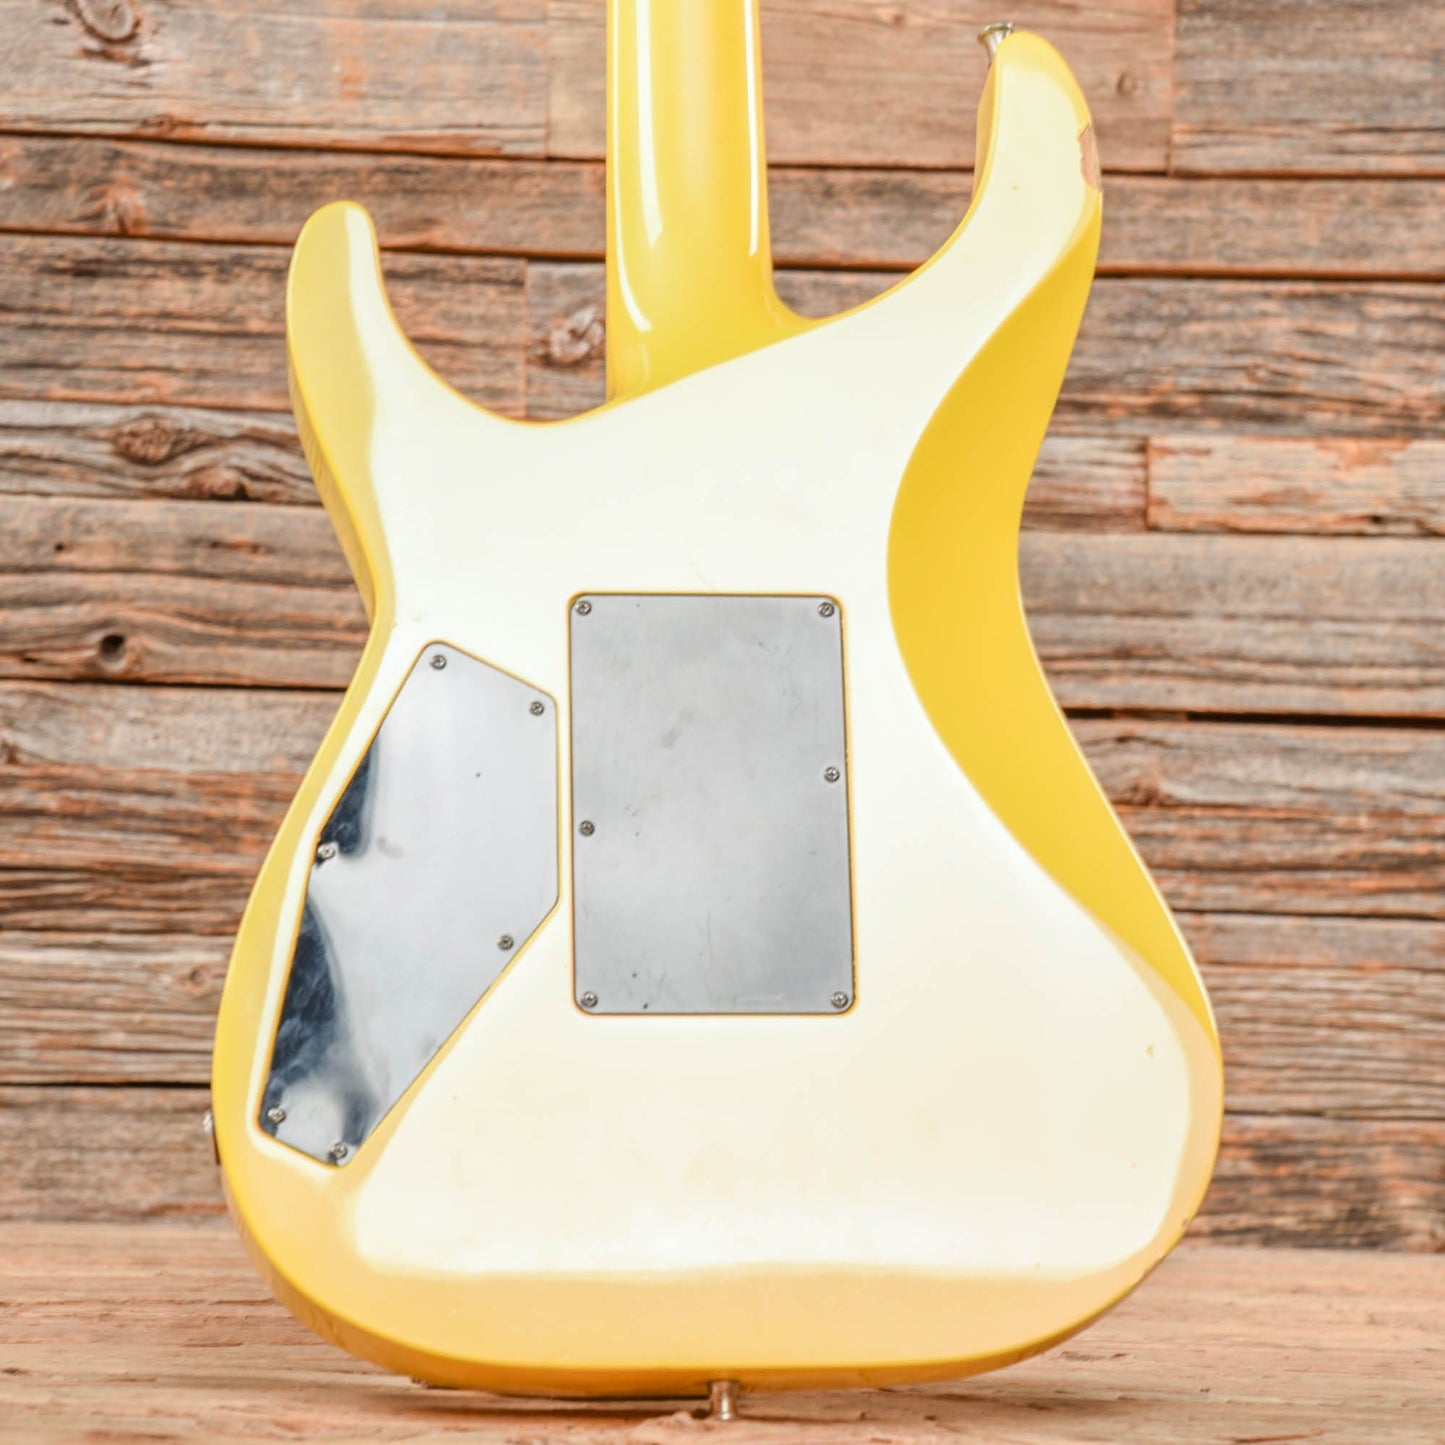 ESP The Mirage Custom Yellow 1987 Electric Guitars / Solid Body